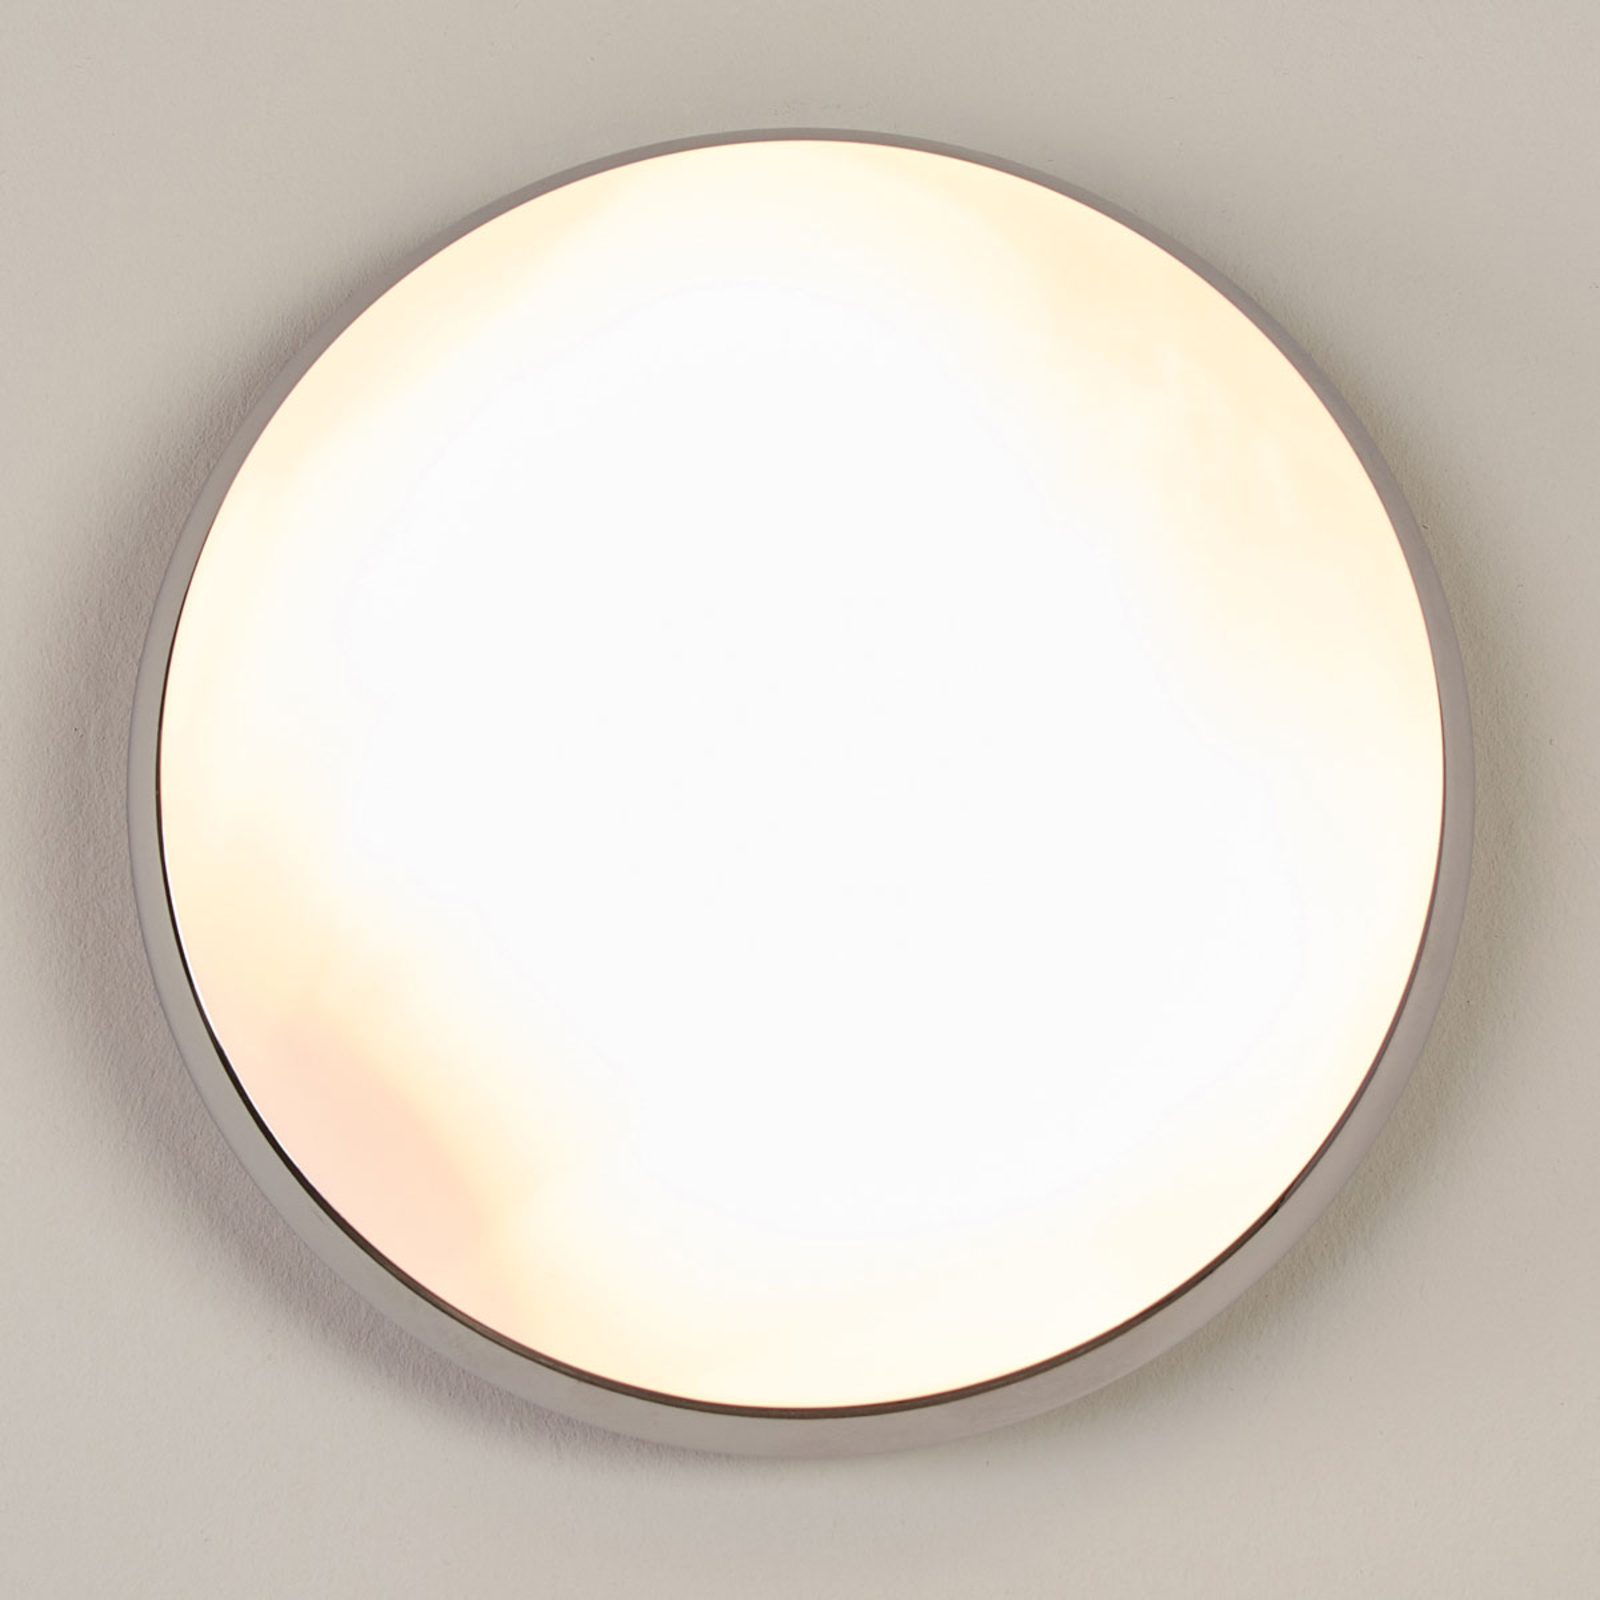 Bathroom ceiling light Mijo with chrome rim, IP44